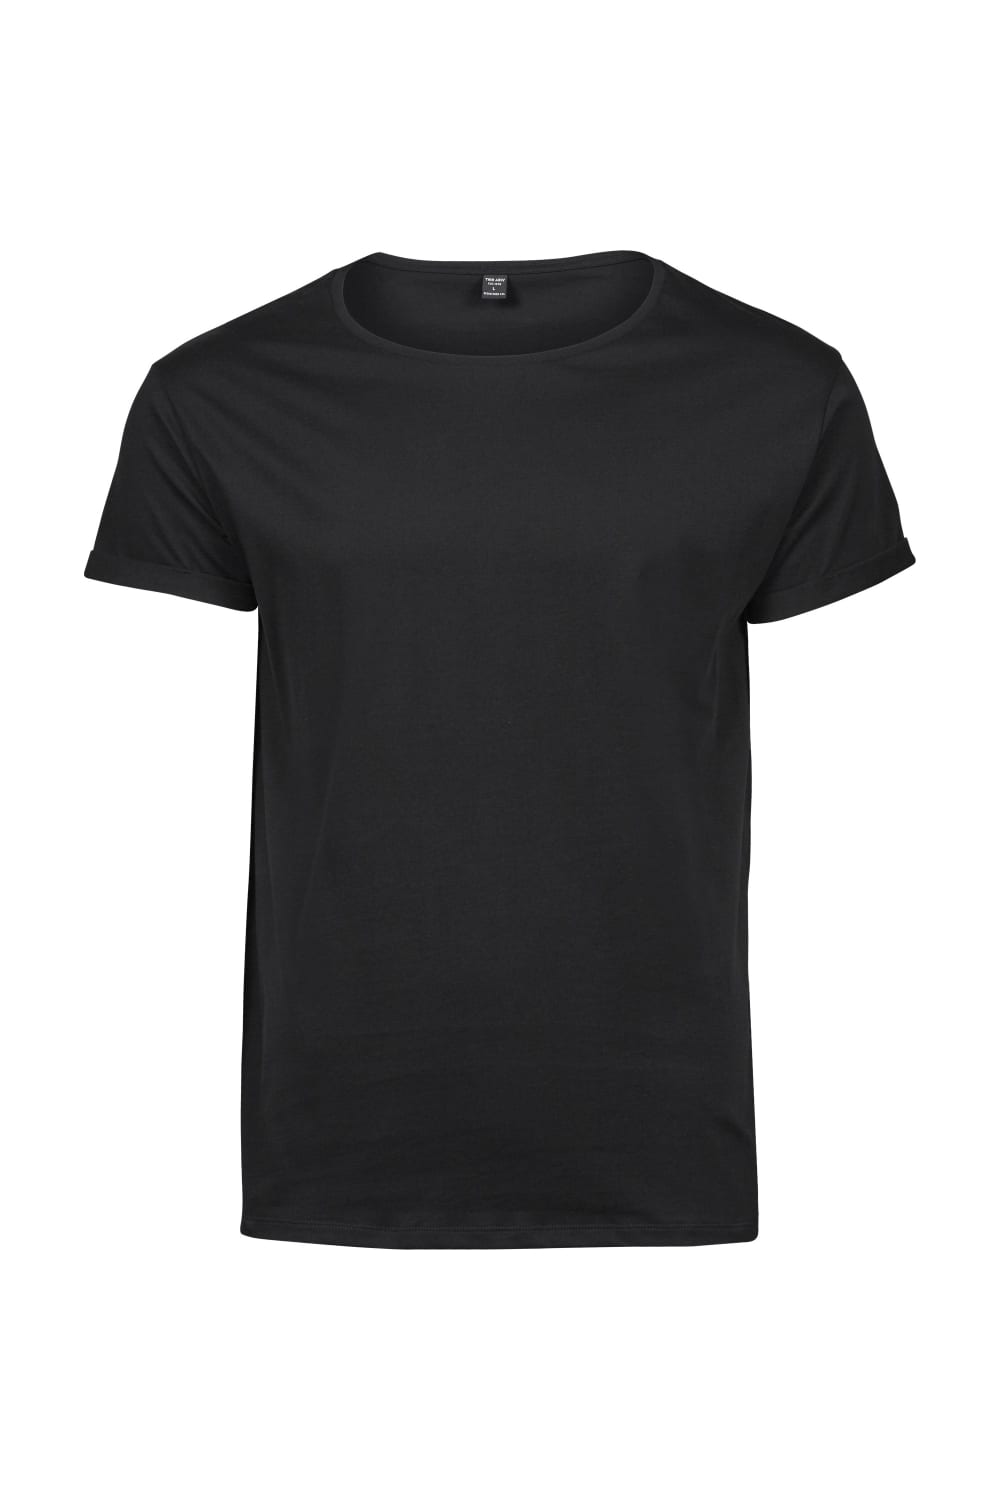 Tee Jays Mens Roll-Up T-Shirt (Black)